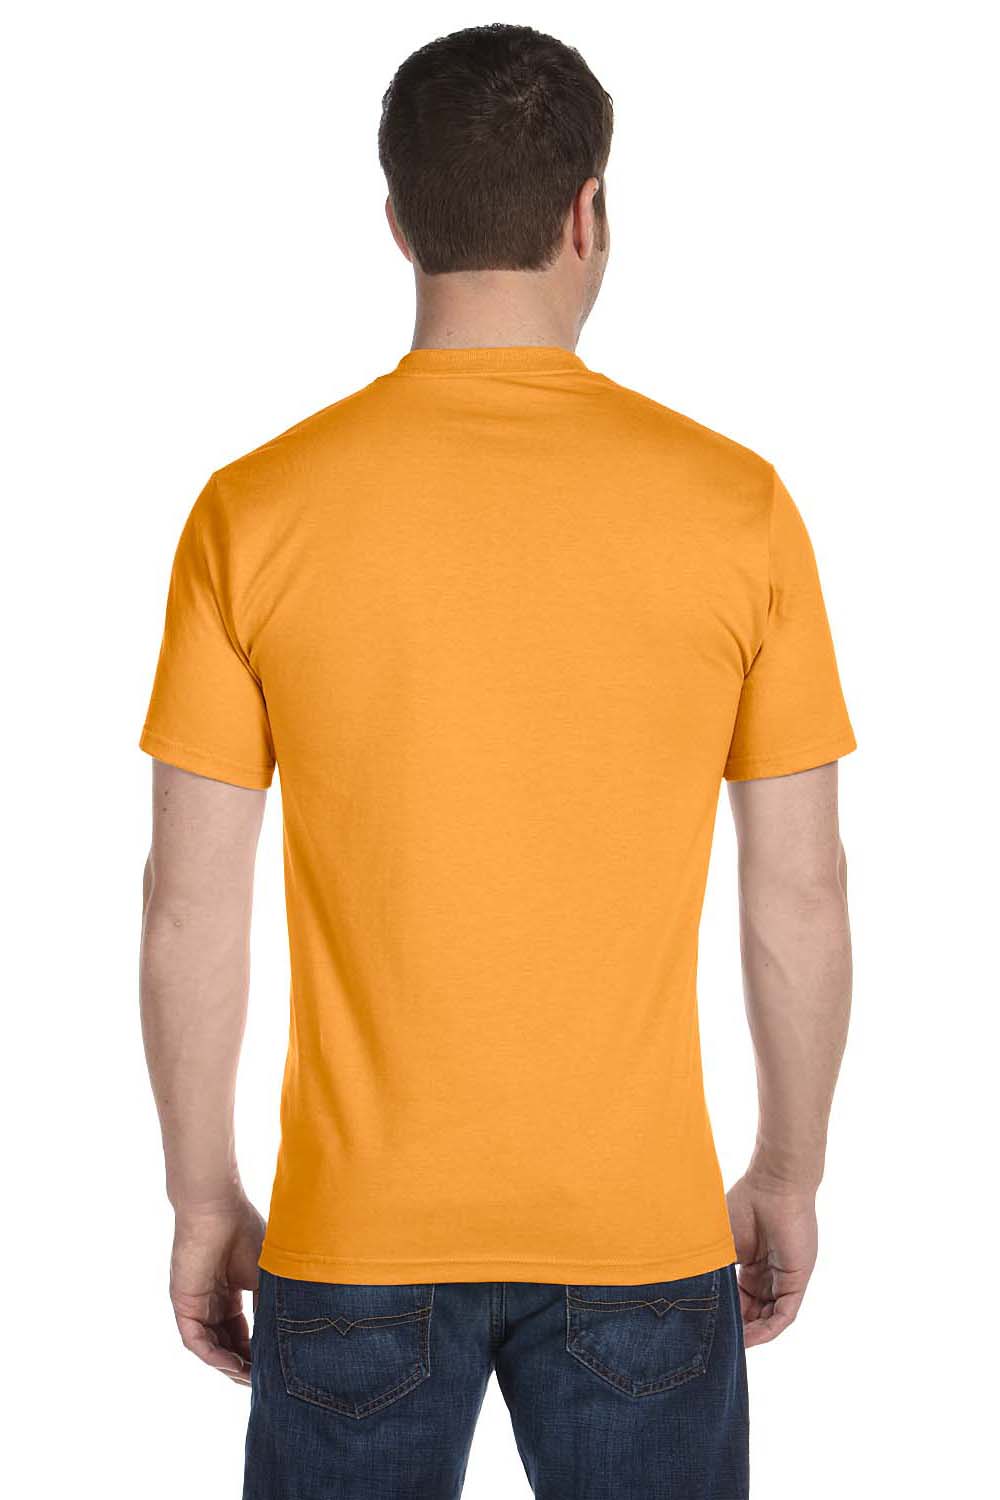 Hanes 5280 Mens ComfortSoft Short Sleeve Crewneck T-Shirt Gold Back